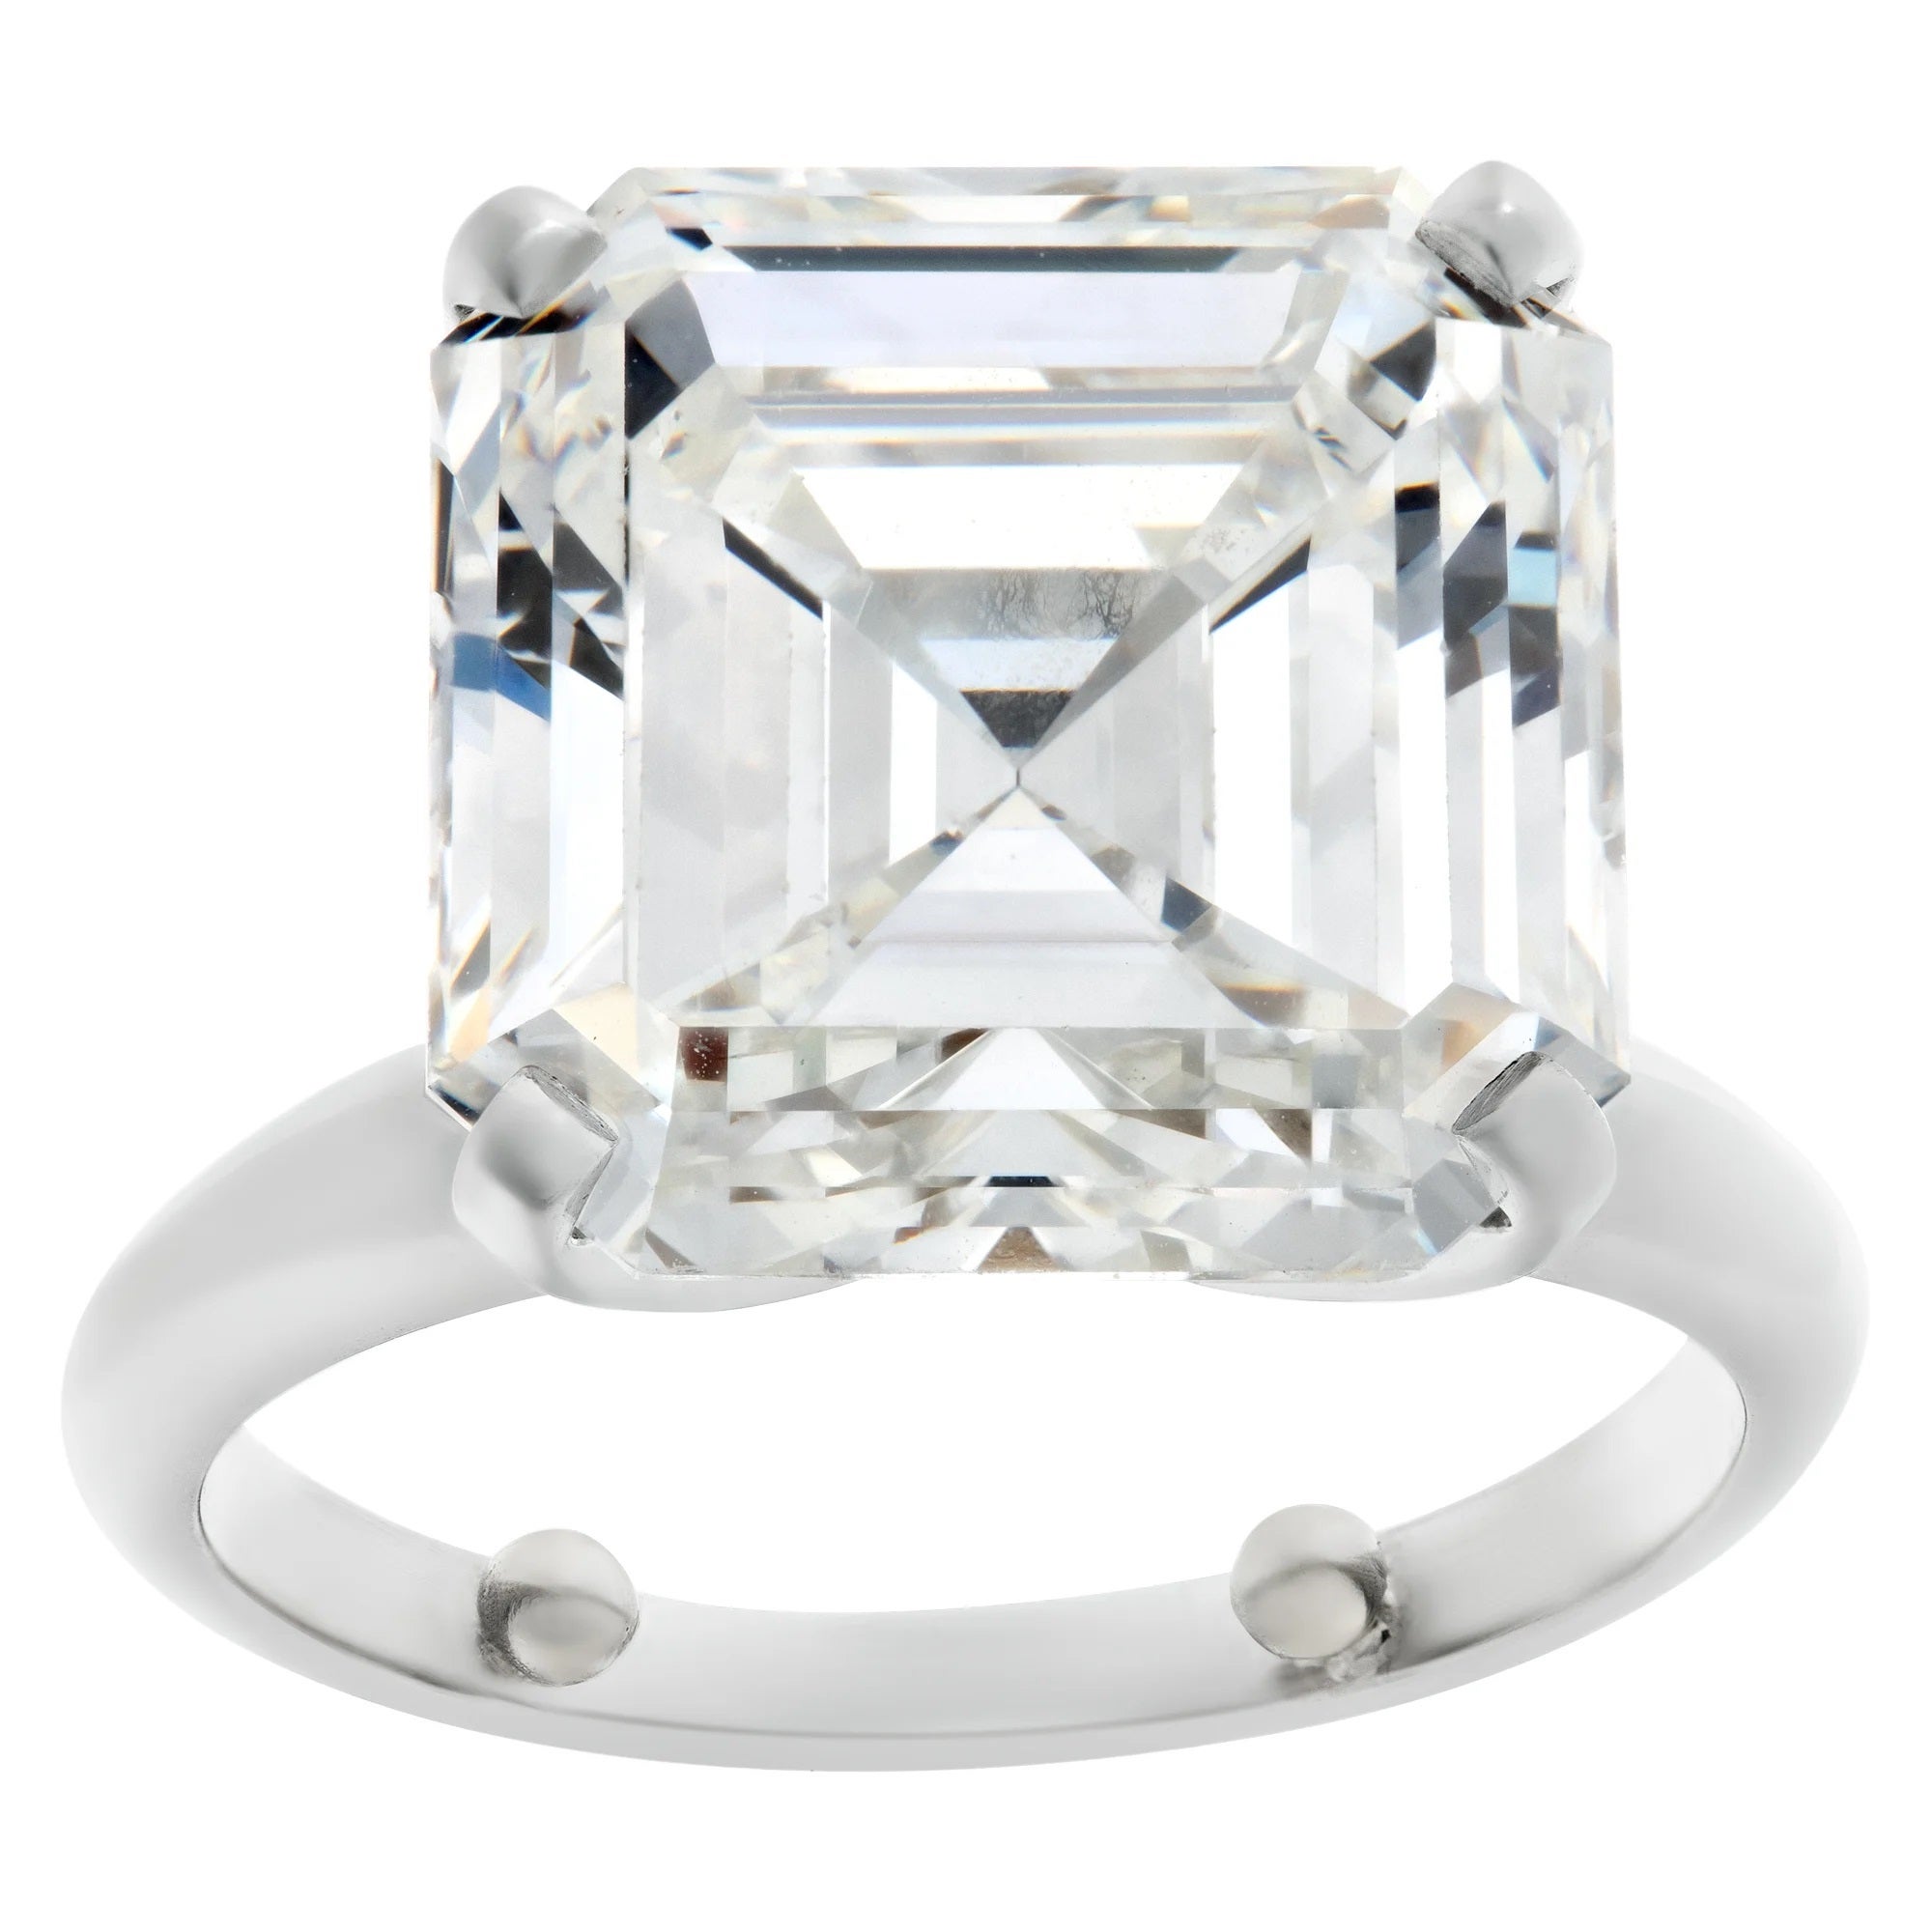 GIA Certified Asscher Cut Diamond 9.03 Carat 'G Color, VS 1 Clarity' Solitaire  For Sale